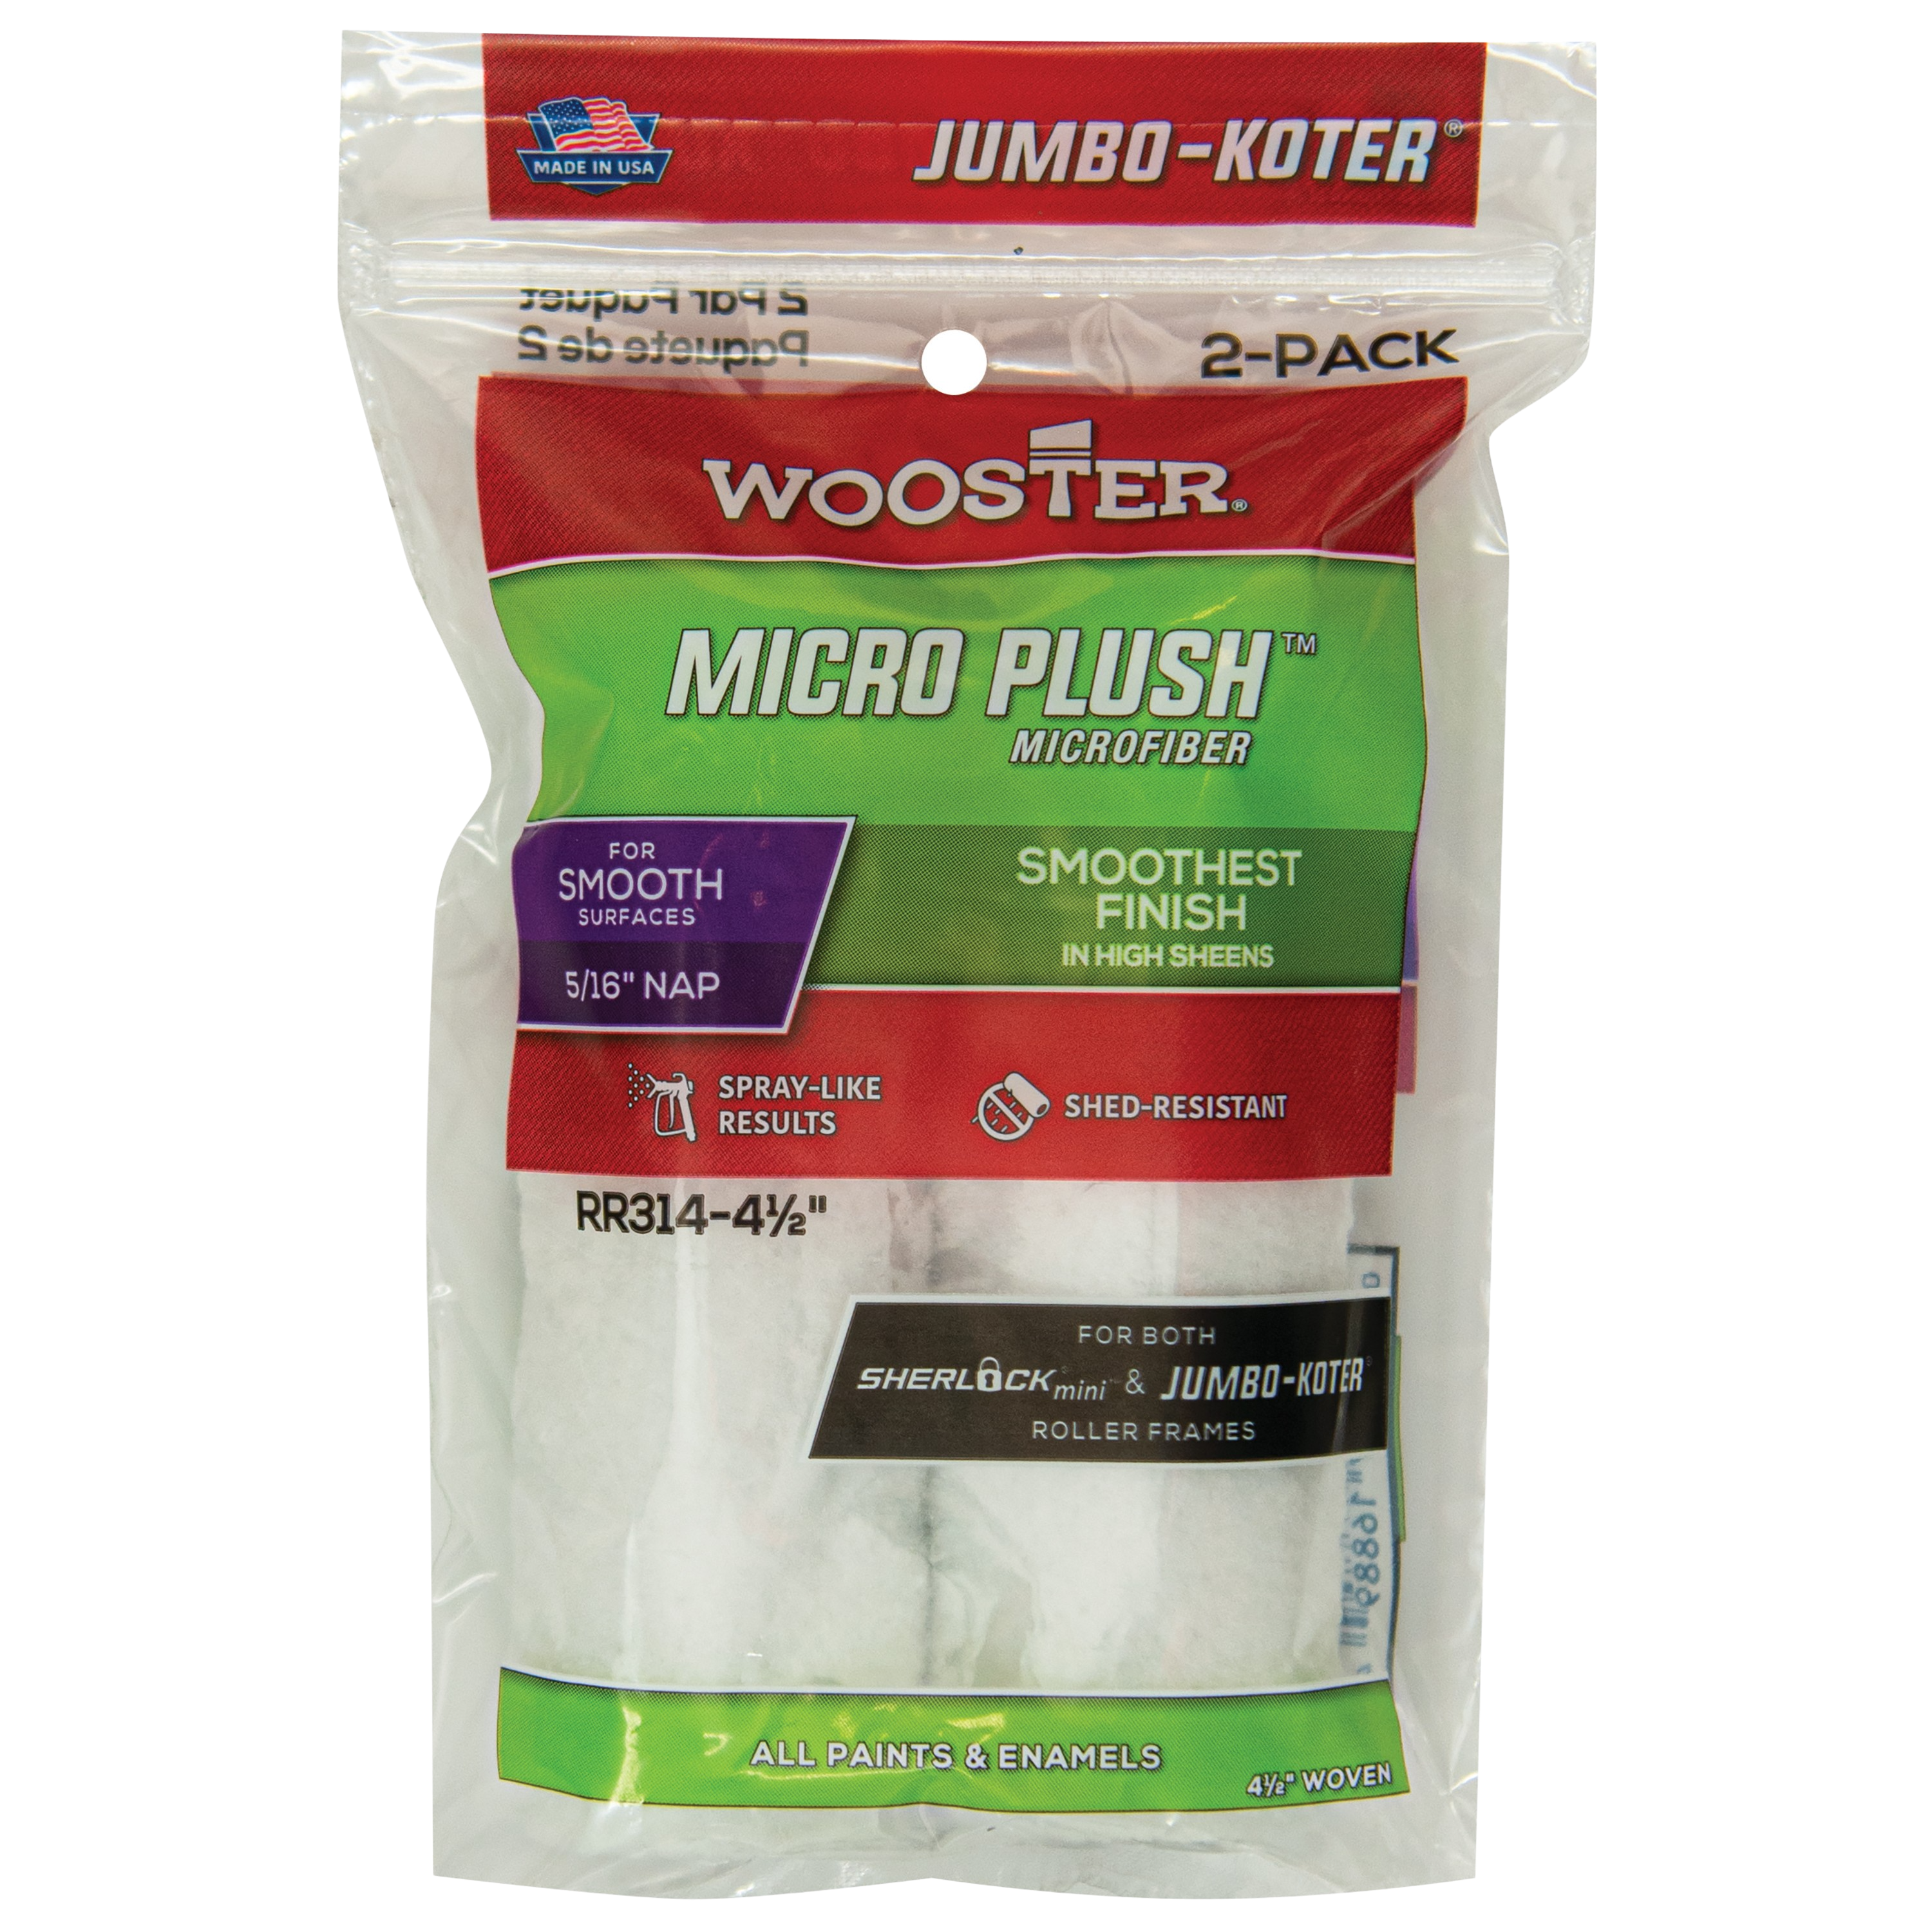 Micro Plush Jumbo-Koter Mini Paint Roller Sleeves 5/16 Nap (2 Pack)